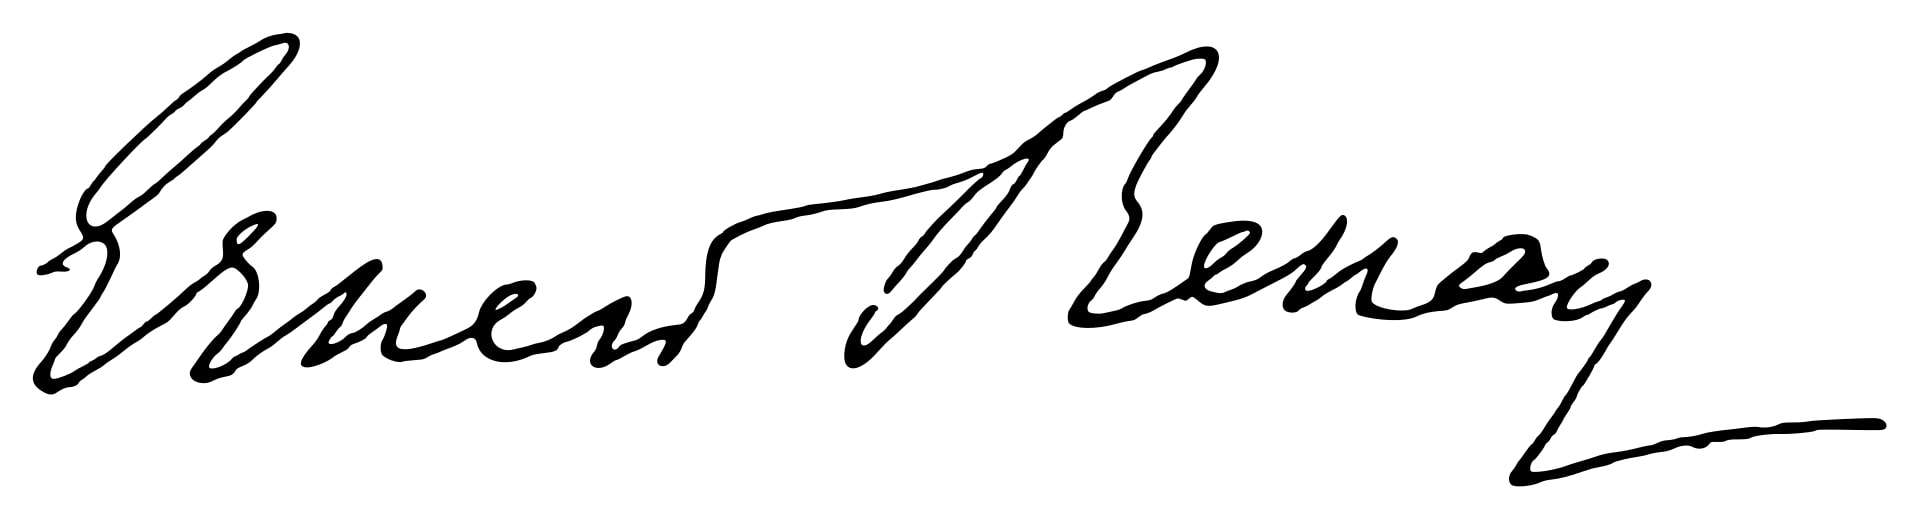 Ernest Renan Signature